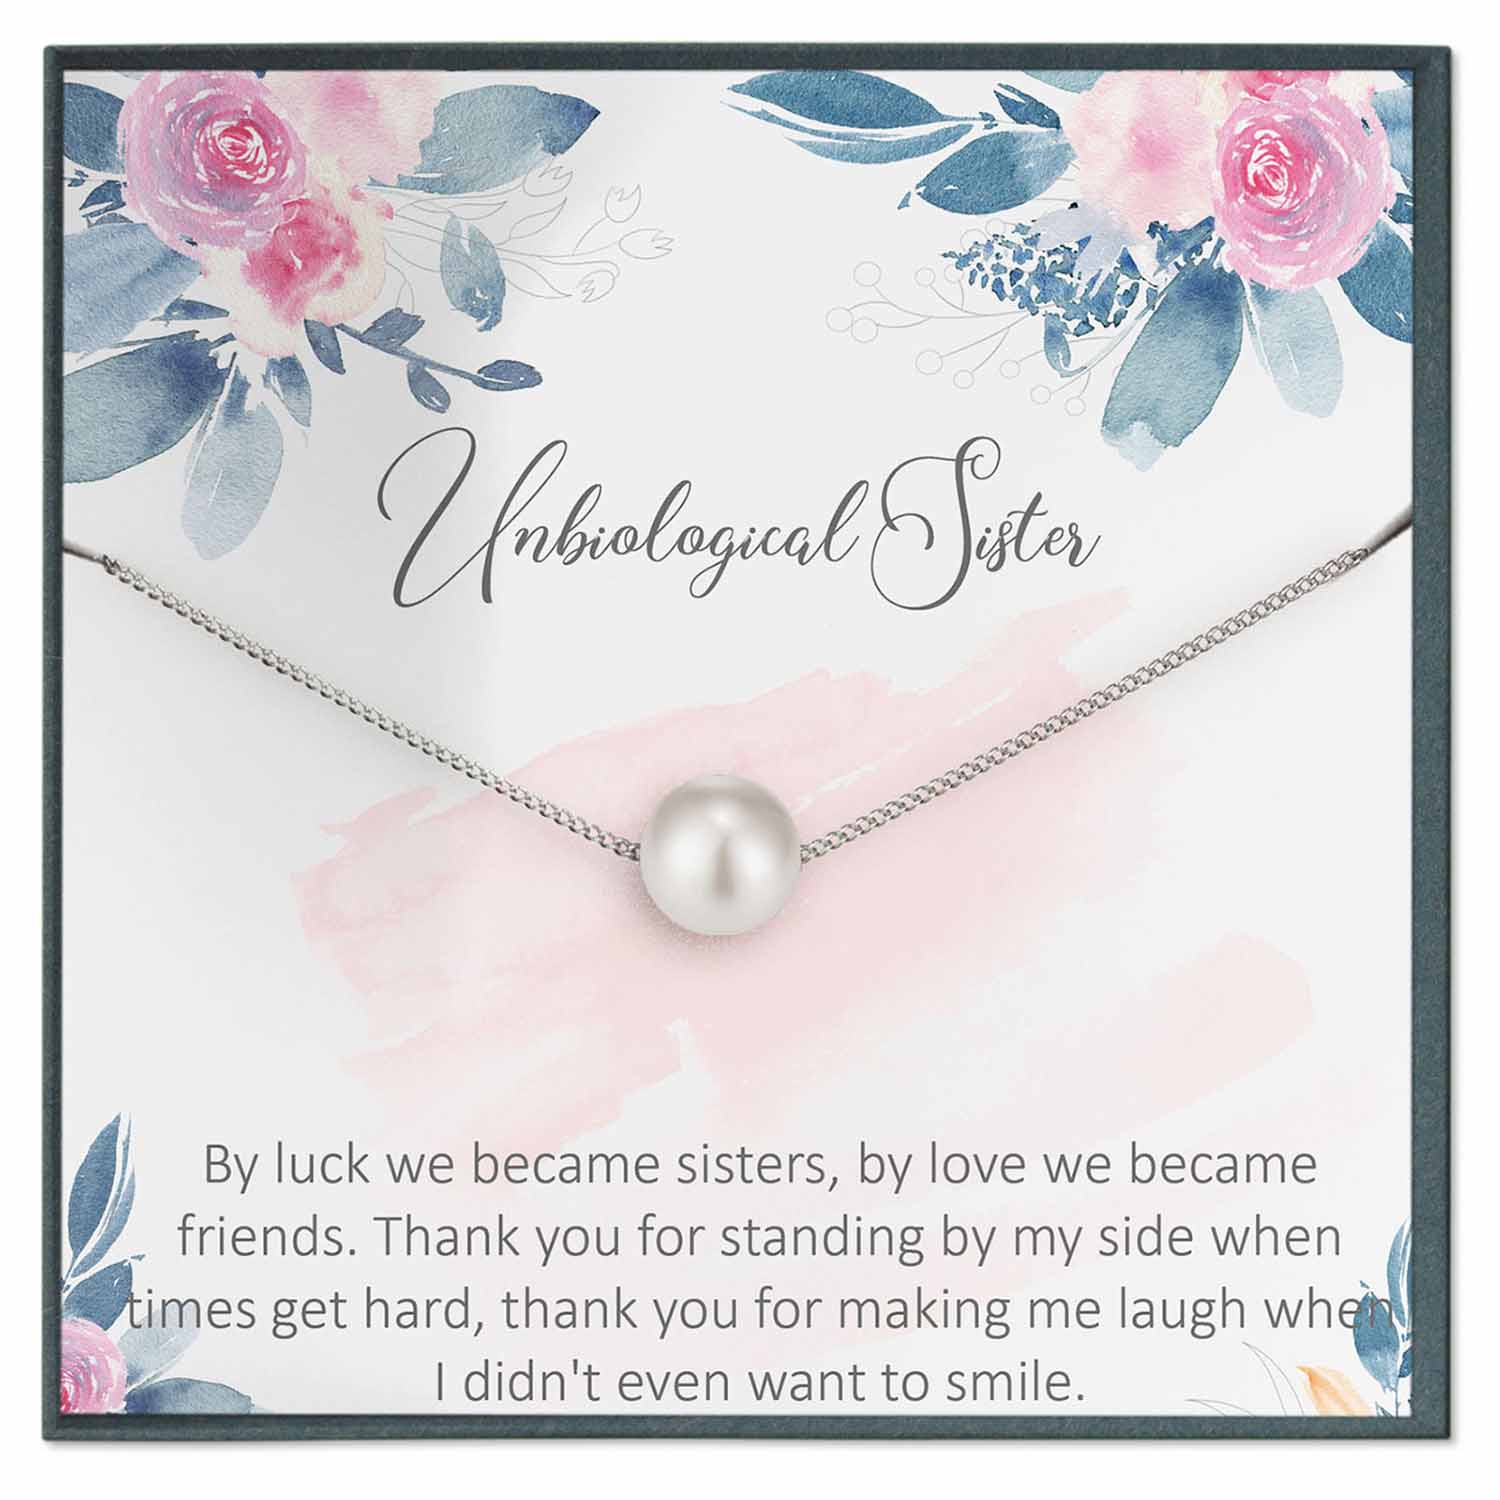 Unbiological Sister Necklace Gift